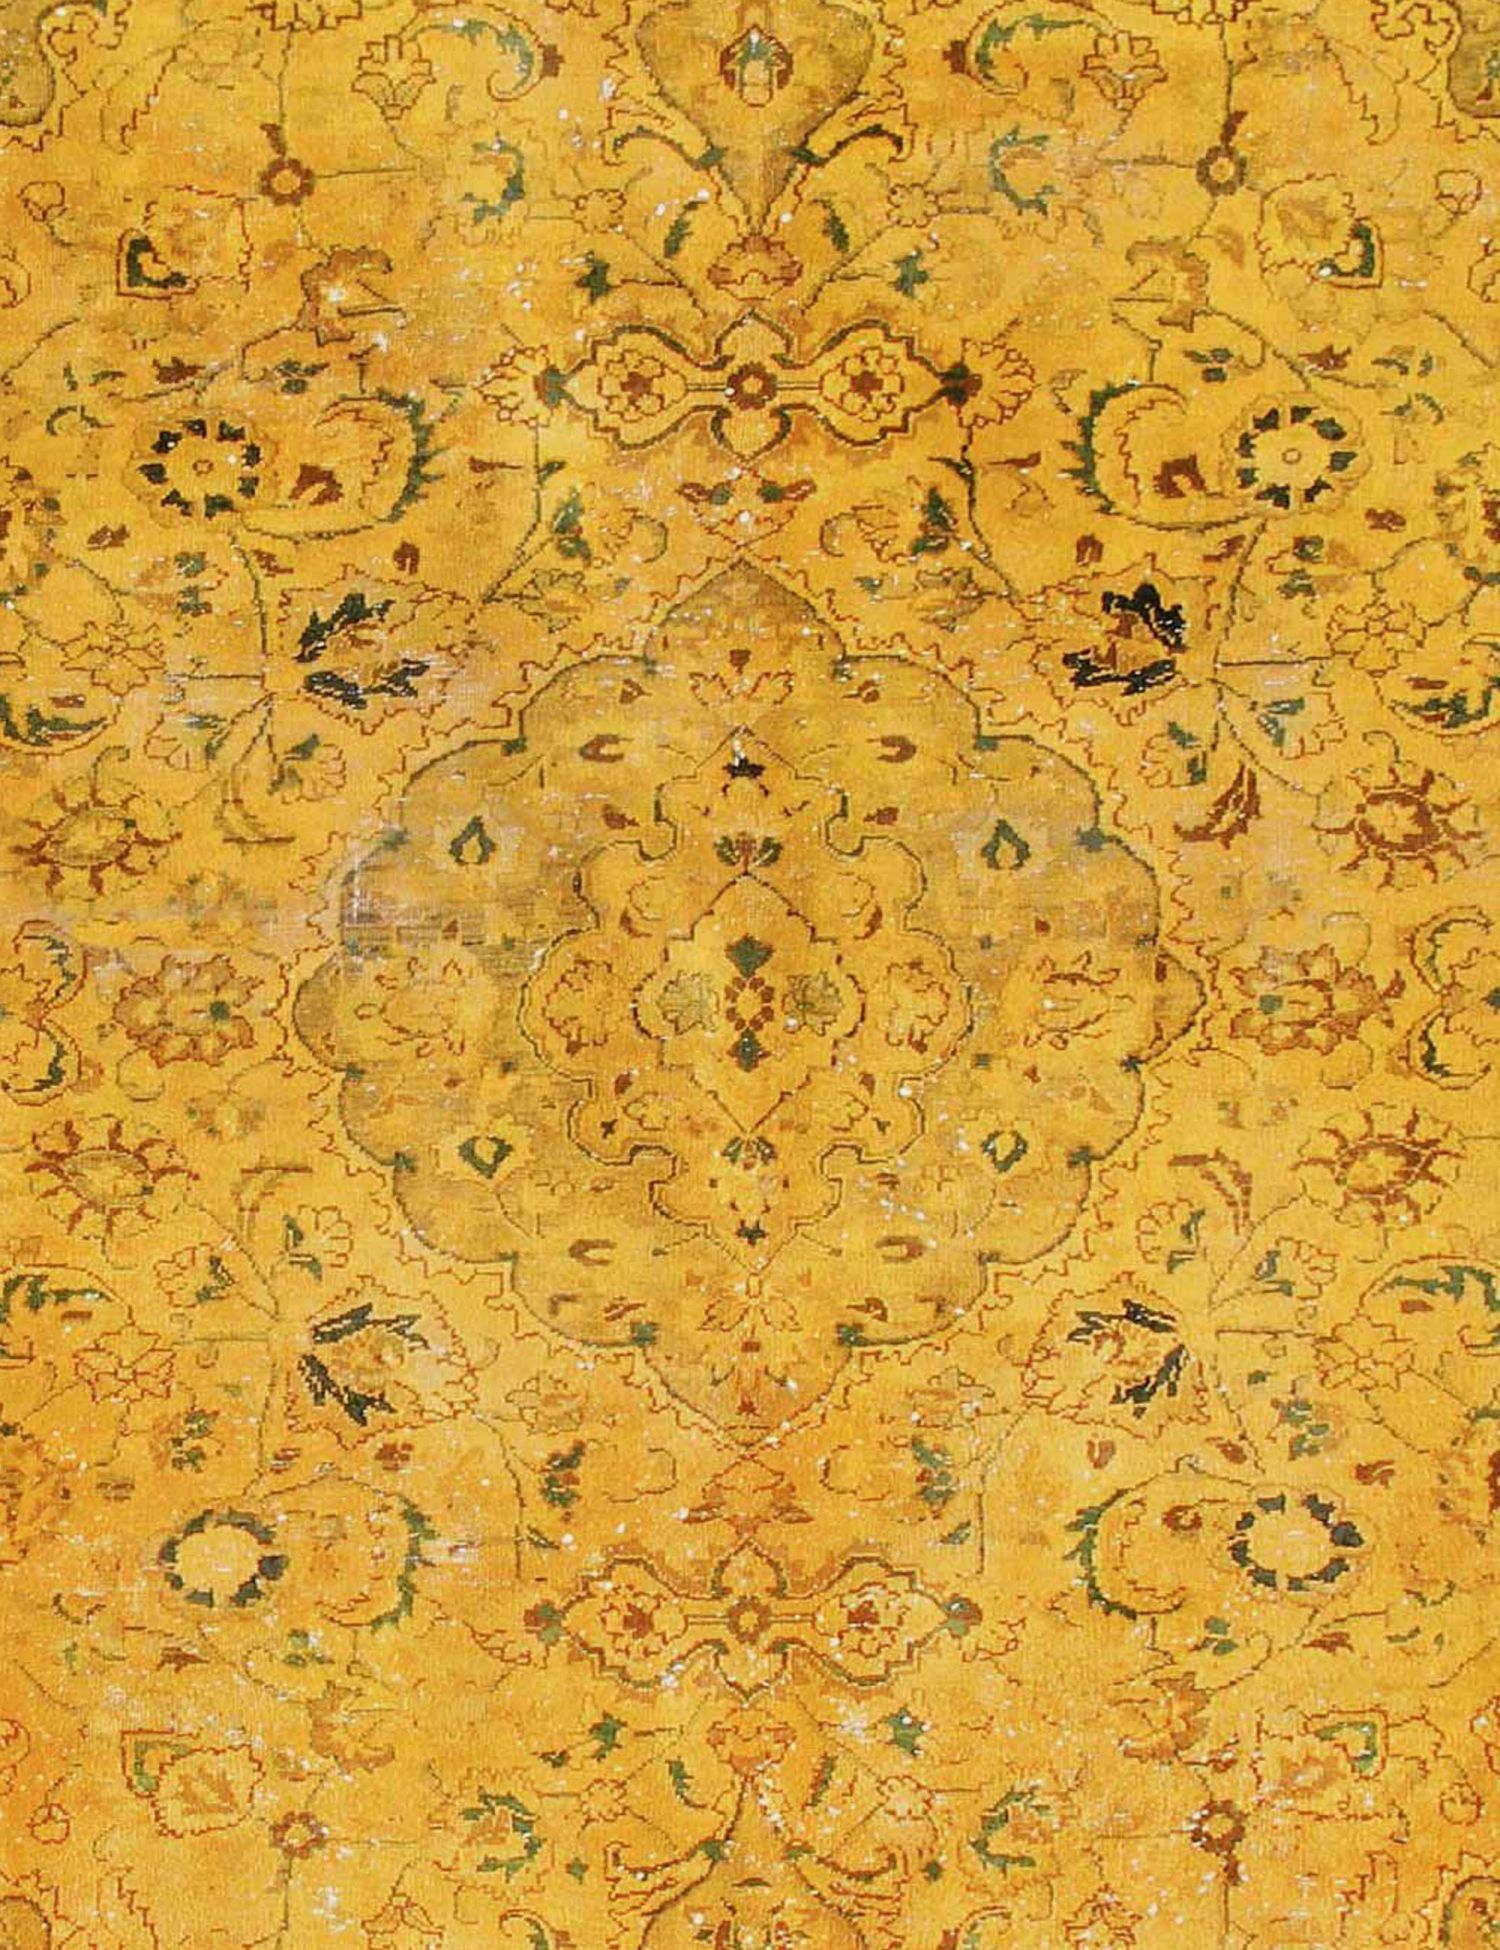 Quadrat  Vintage Teppich  gelb <br/>193 x 193 cm